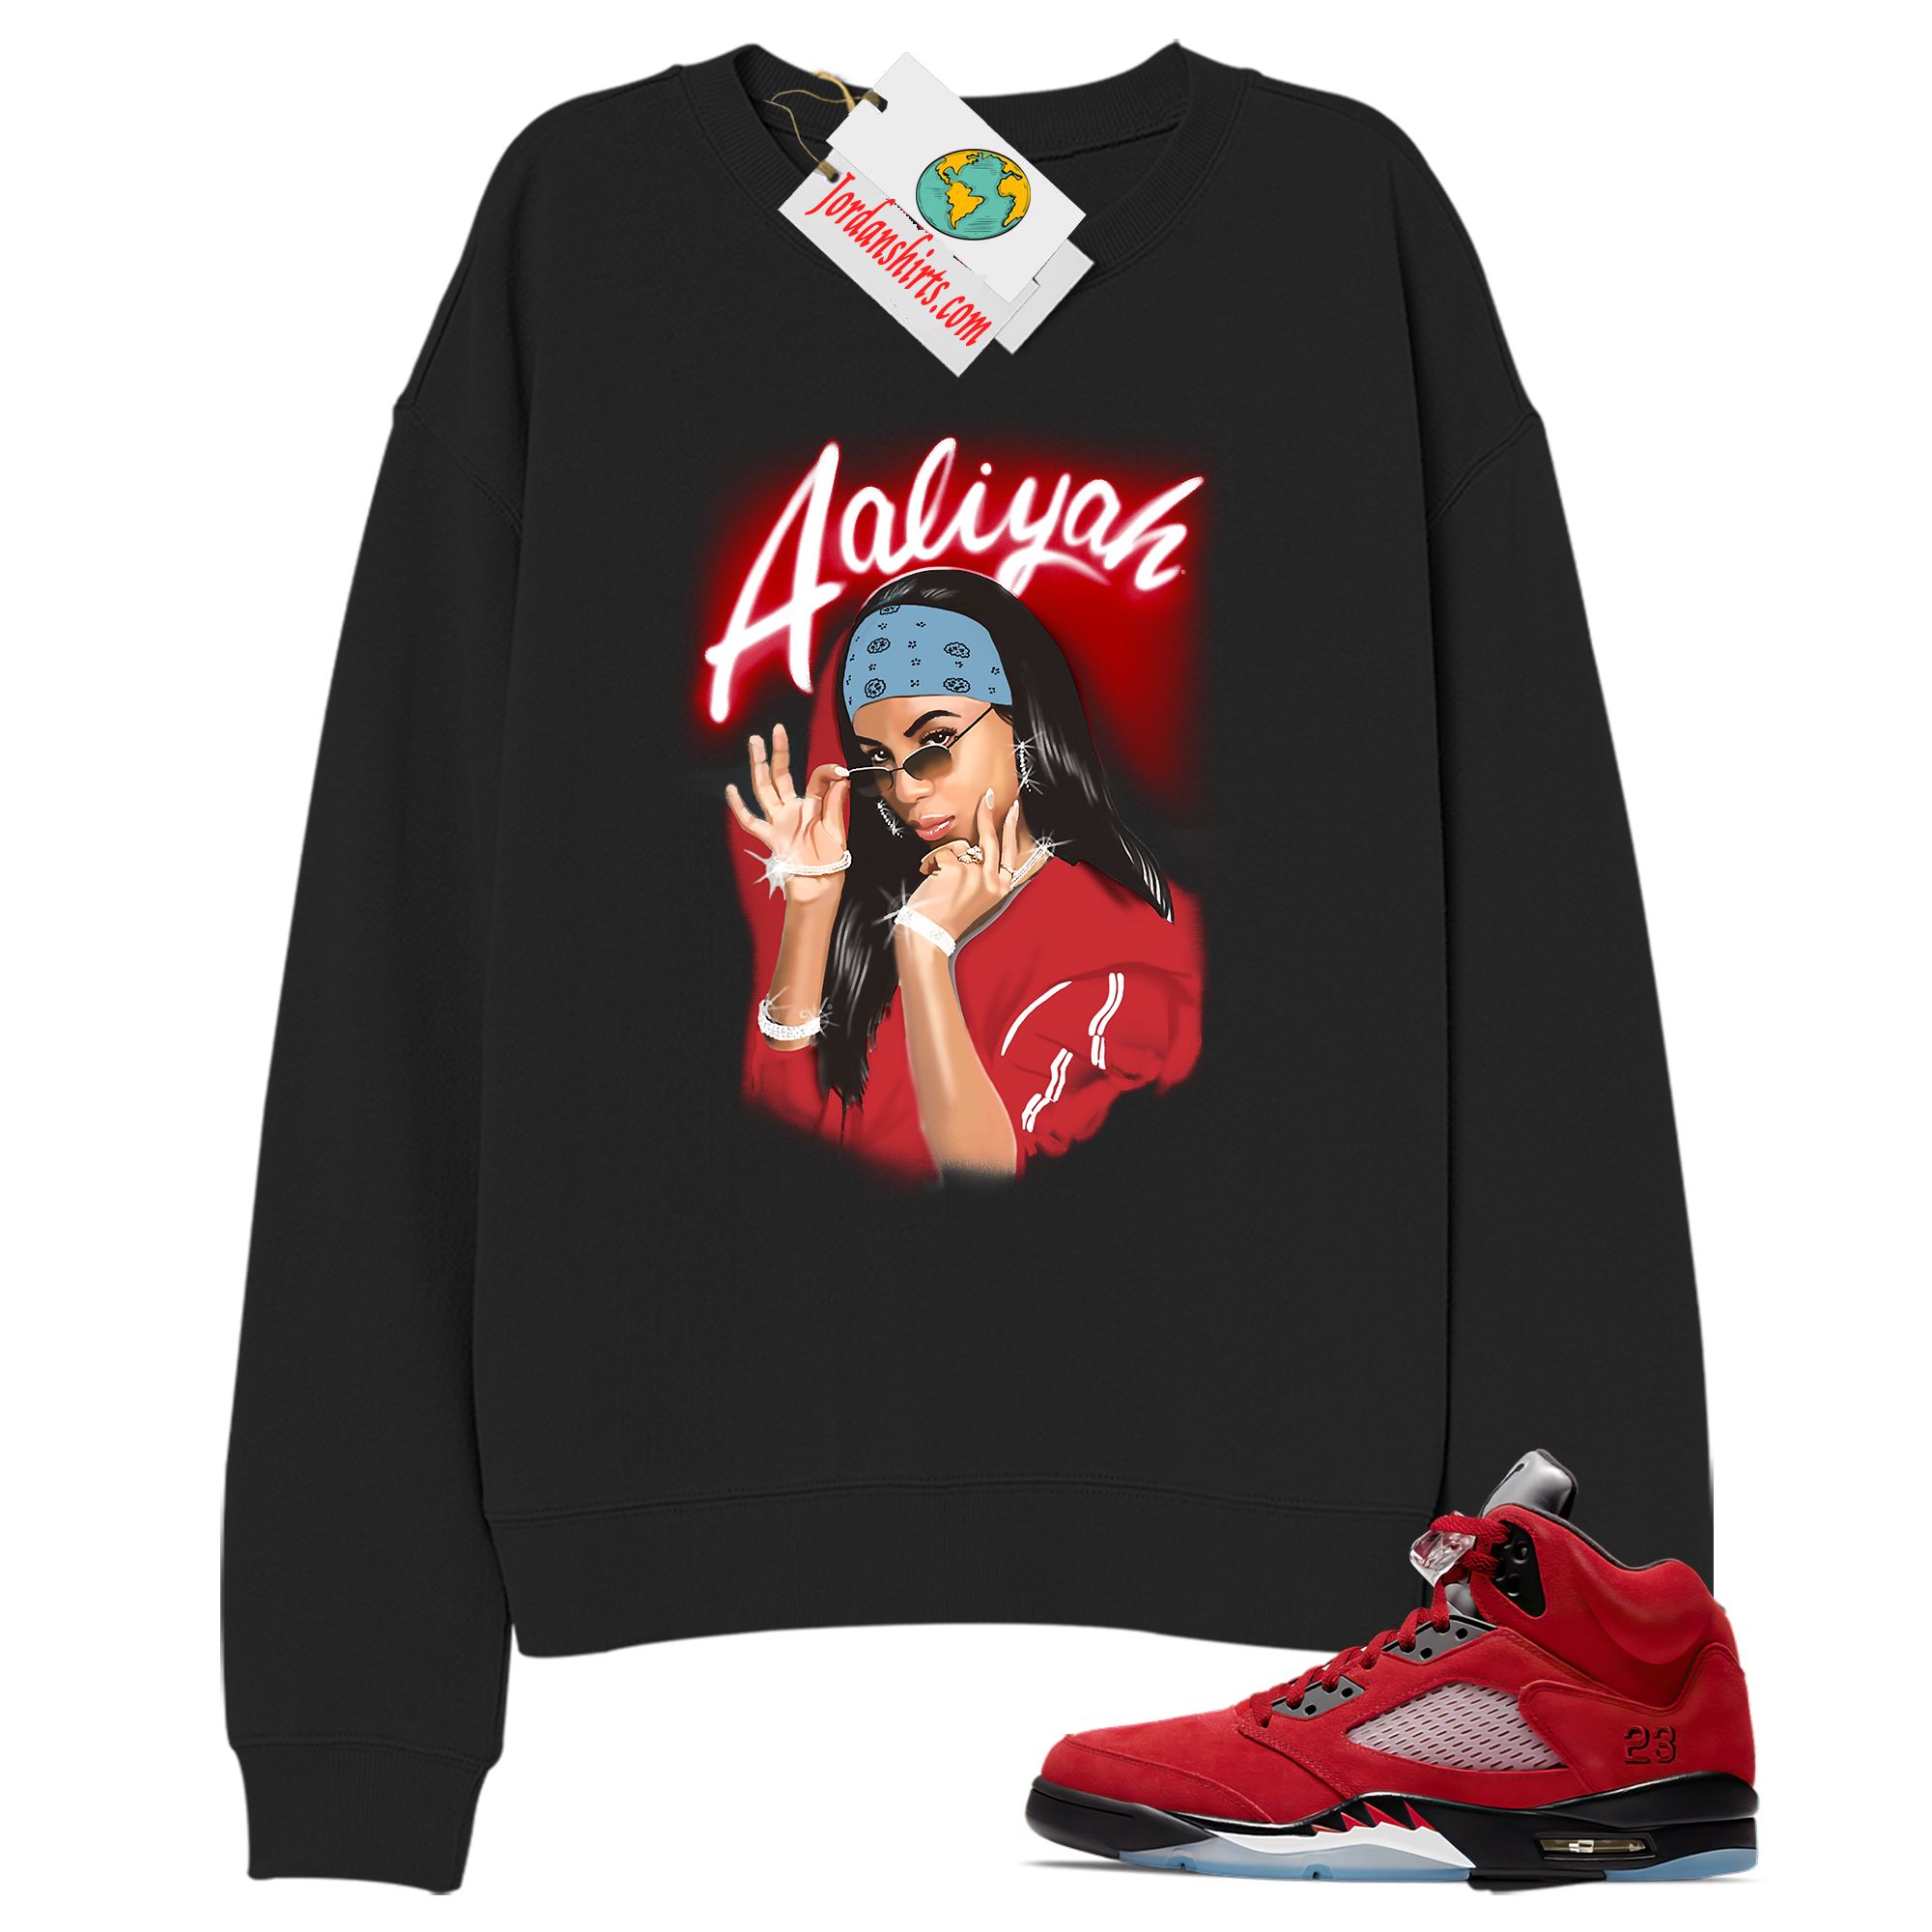 Jordan 5 Sweatshirt, Aaliyah Airbrush Black Sweatshirt Air Jordan 5 Raging Bull 5s Plus Size Up To 5xl